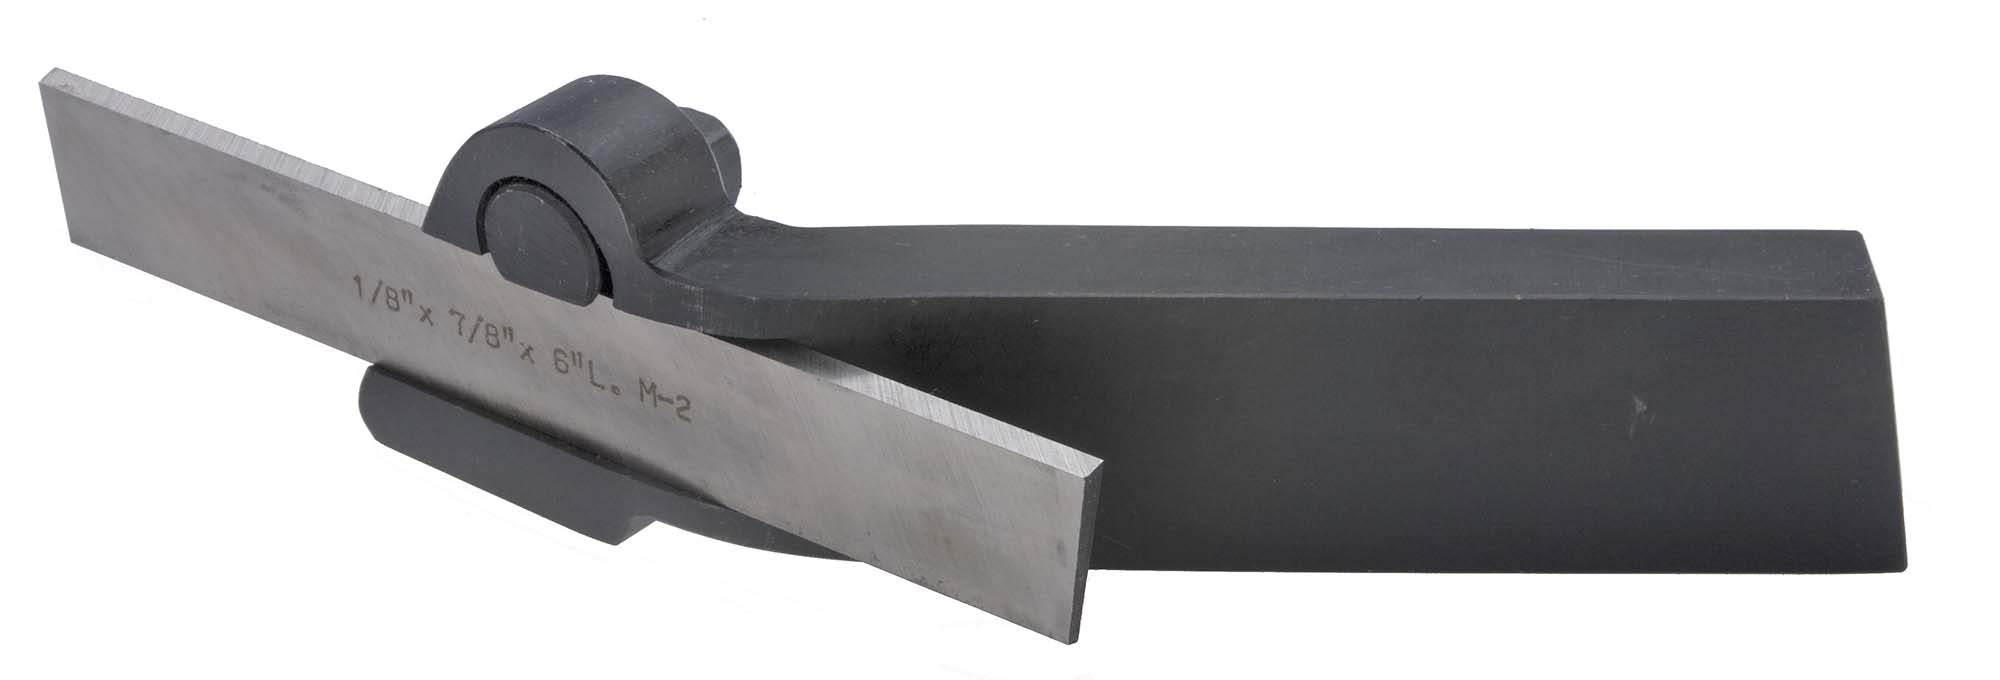 1 X 2" Shank Right Hand Lathe Cutoff Tool Holder, holds 1/4 x 1-1/4" Blades